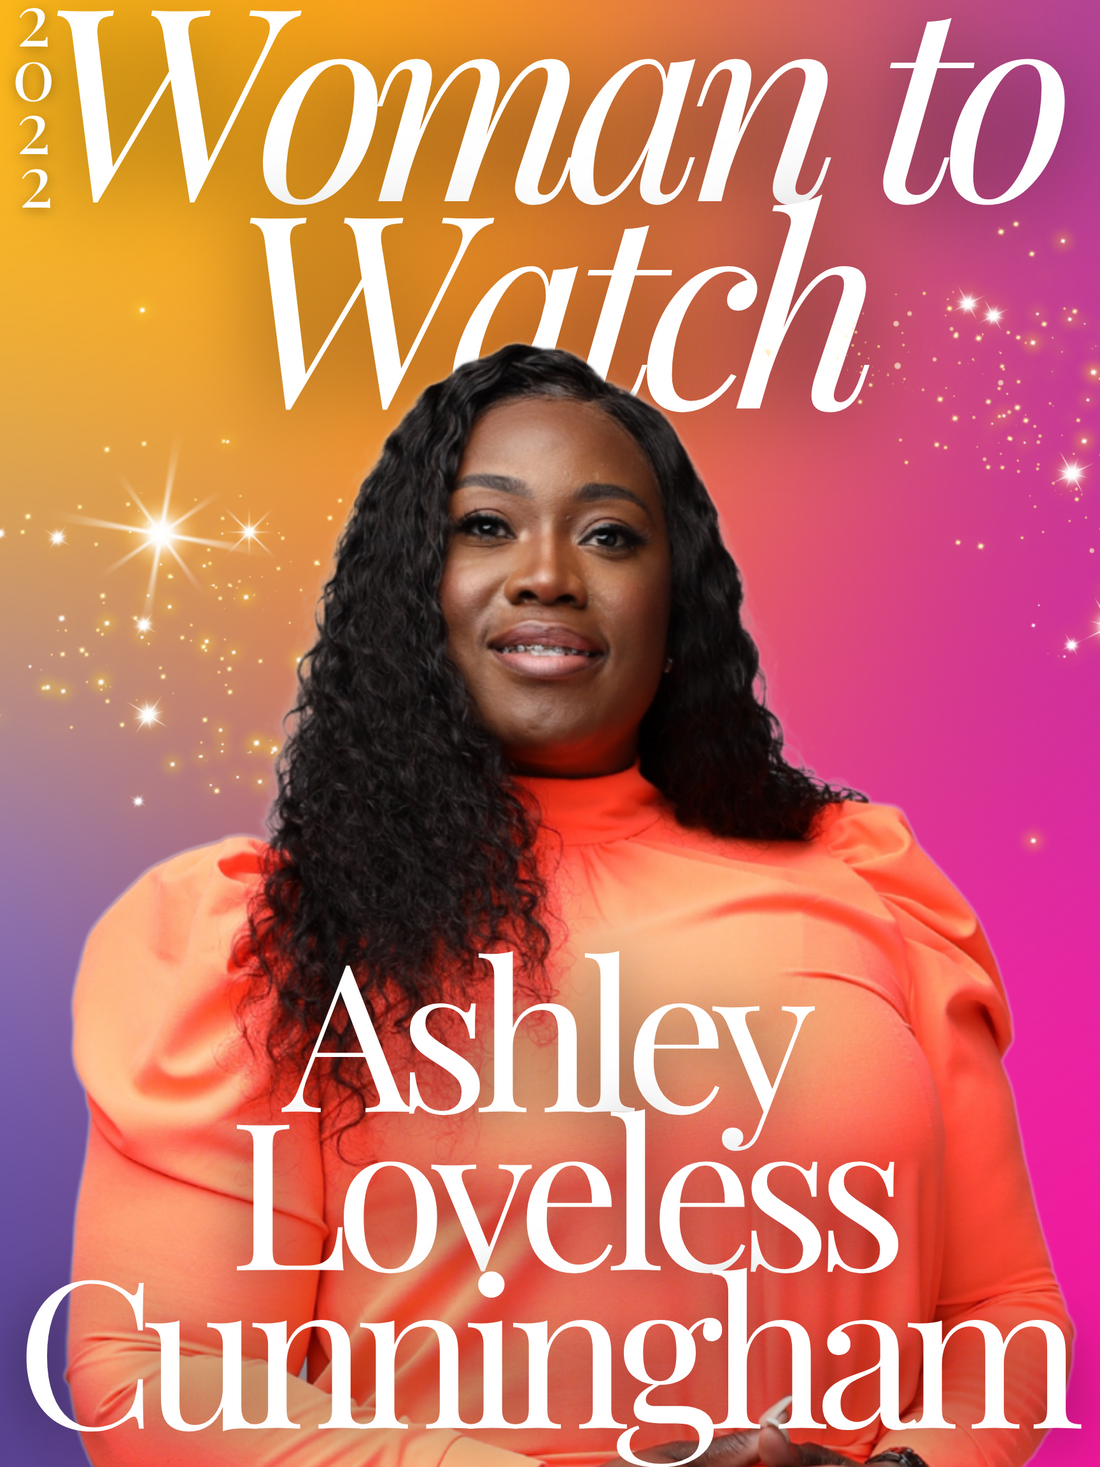 2022 Woman To Watch! Ashley Loveless Cunningham